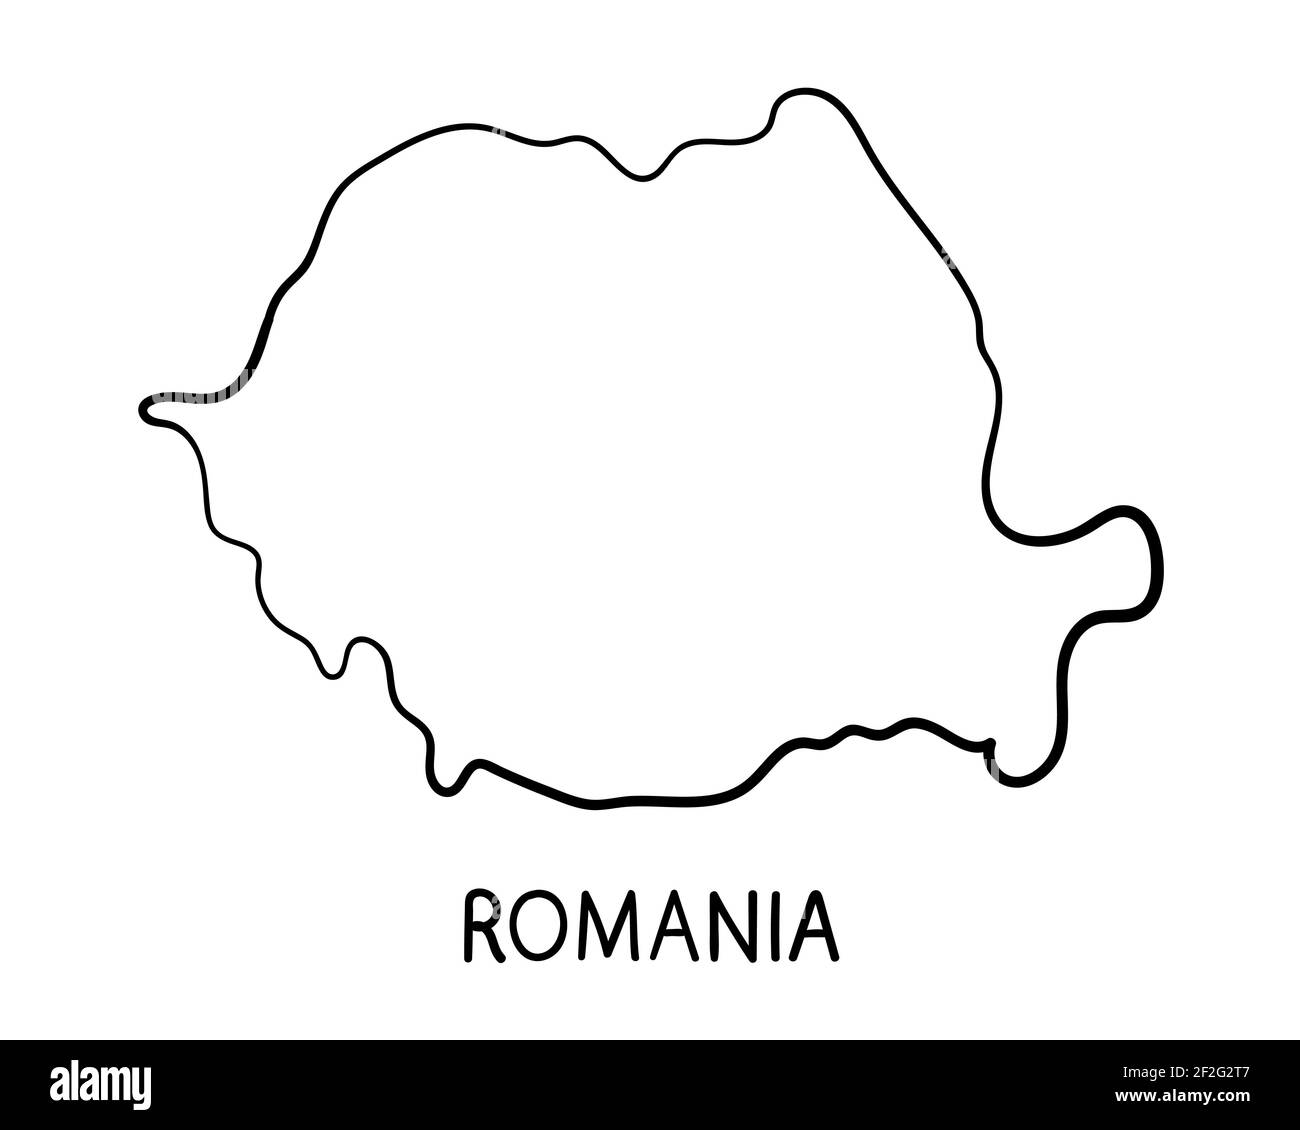 Romania Map - Hand Drawn Illustration Stock Photo